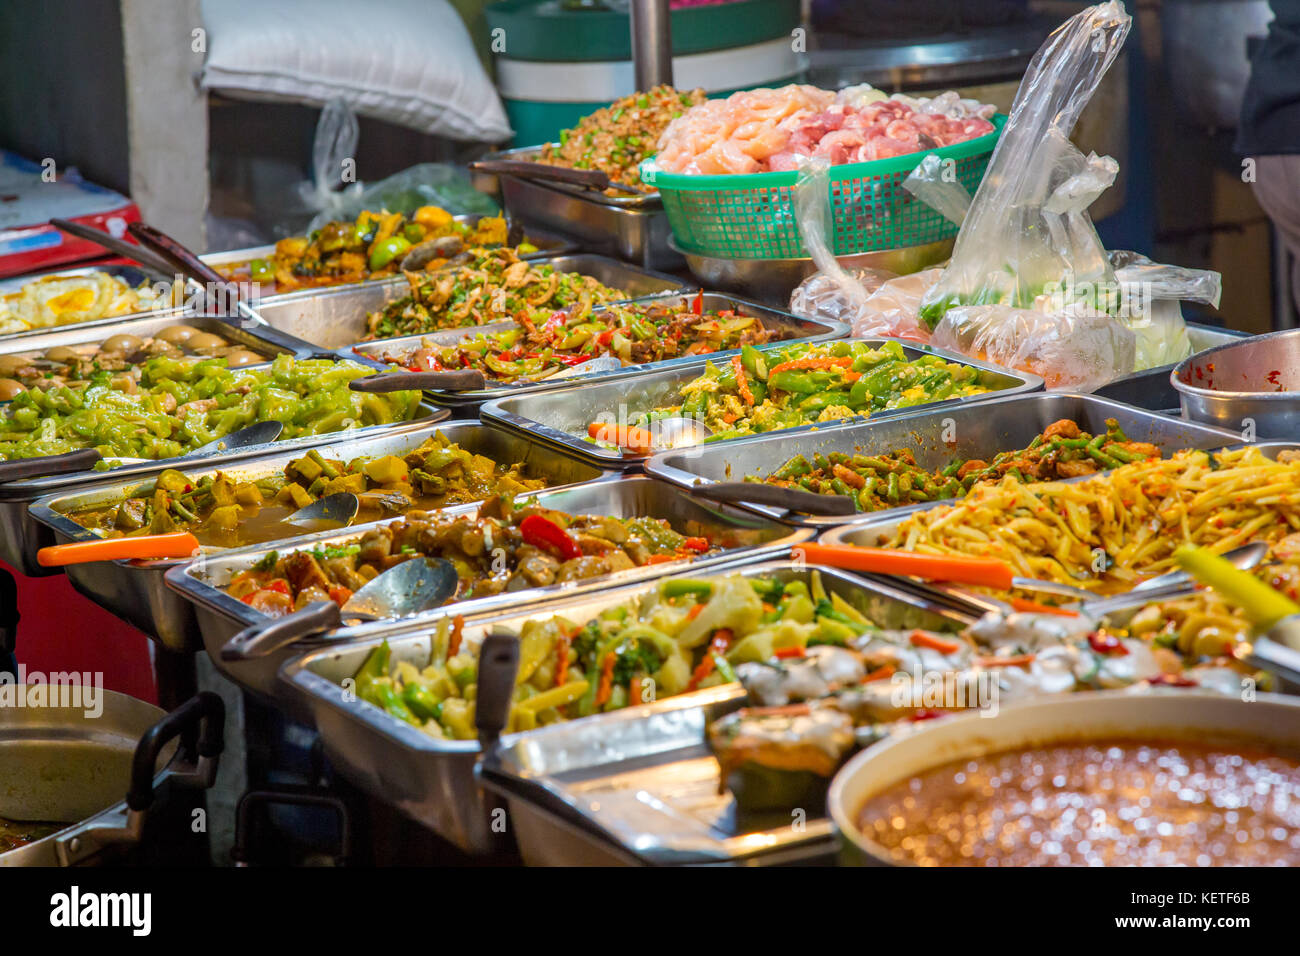 Cucina di strada in stallo, Bangkok, Thailandia Foto Stock